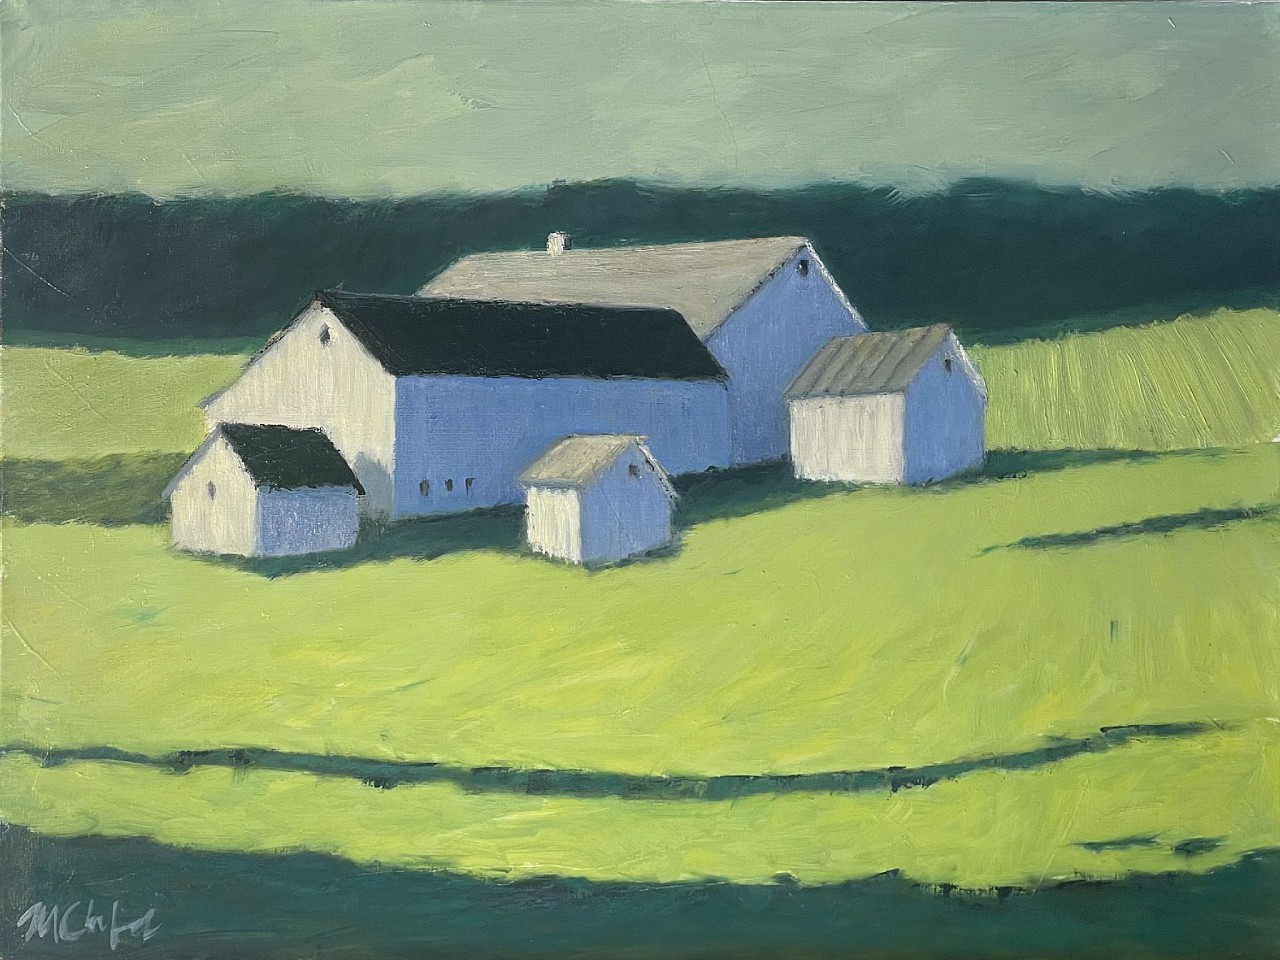 Maureen Chatfield, Miller Craig Farm, 2022
oil on canvas, 18 x 24 in. (45.7 x 61 cm)
MC221211